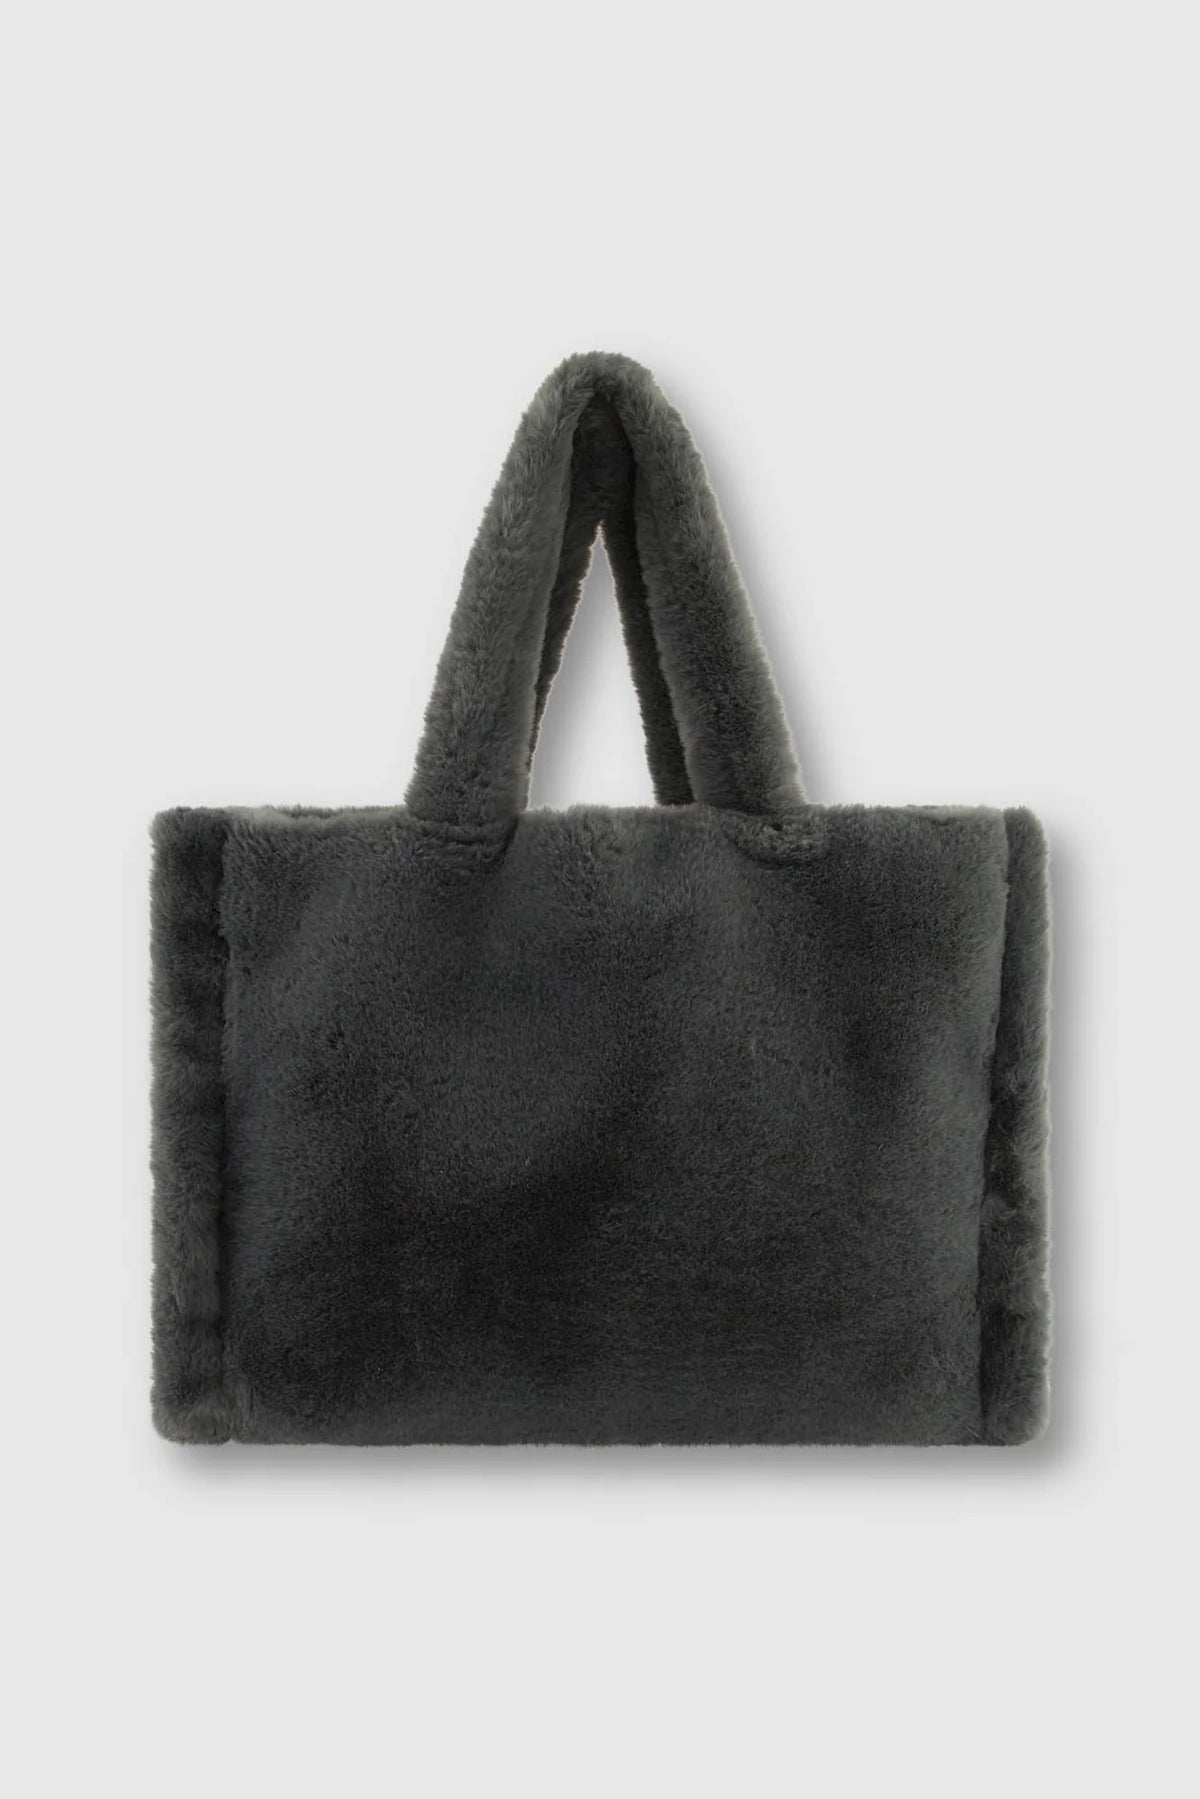 Faux fur dark grey shopper with shoulder handles